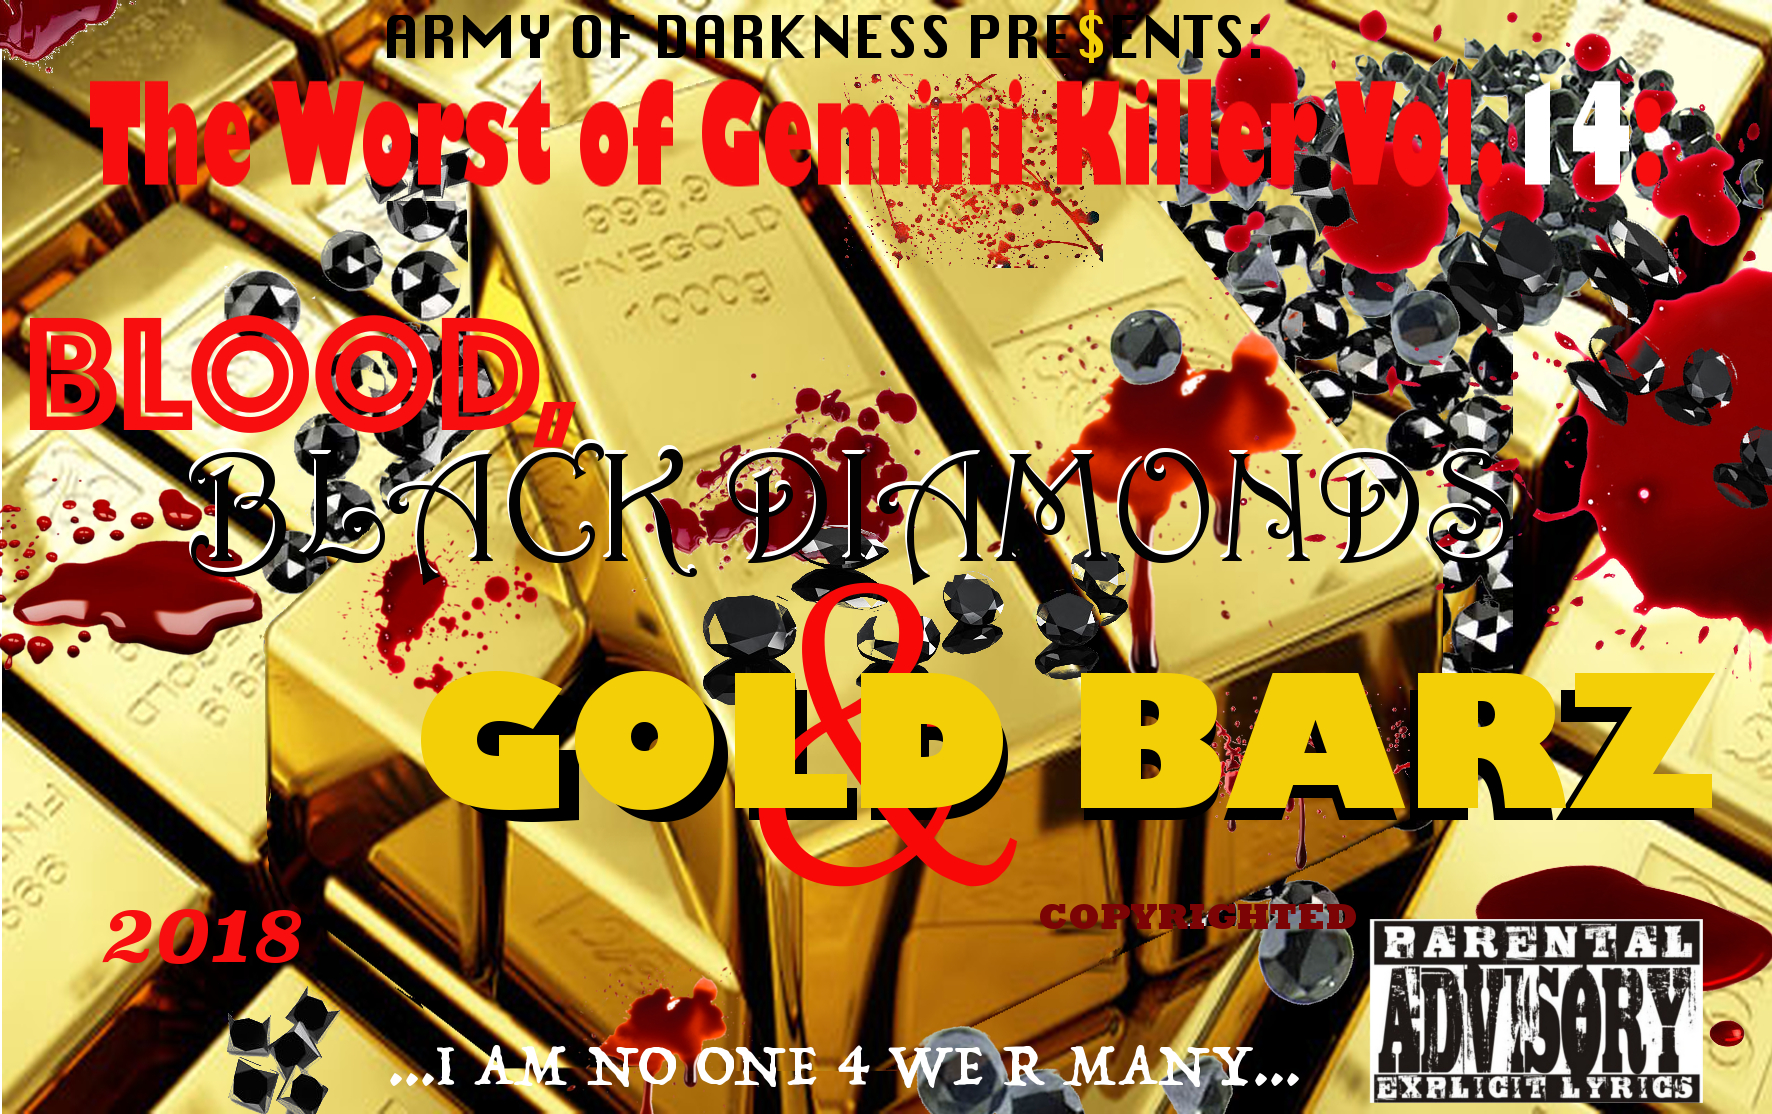 The Worst of Gemini Killer Vol.14:
Blood, Black Diamonds & Gold Barz